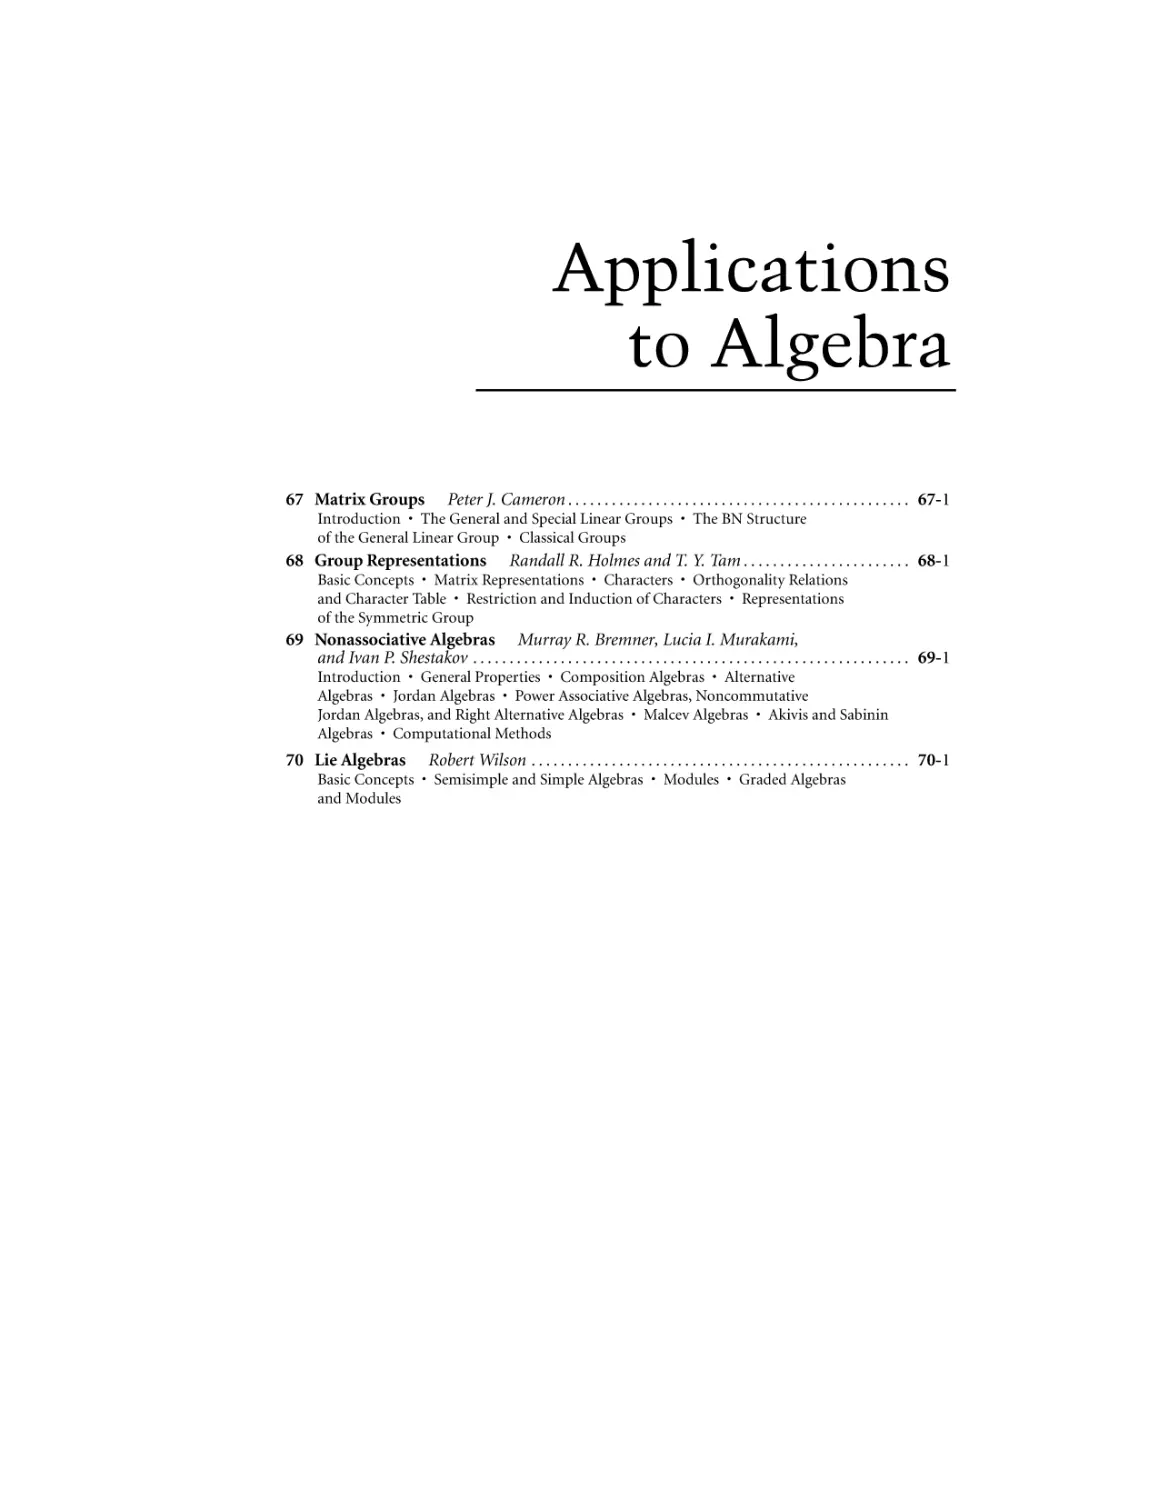 Applications to Algebra